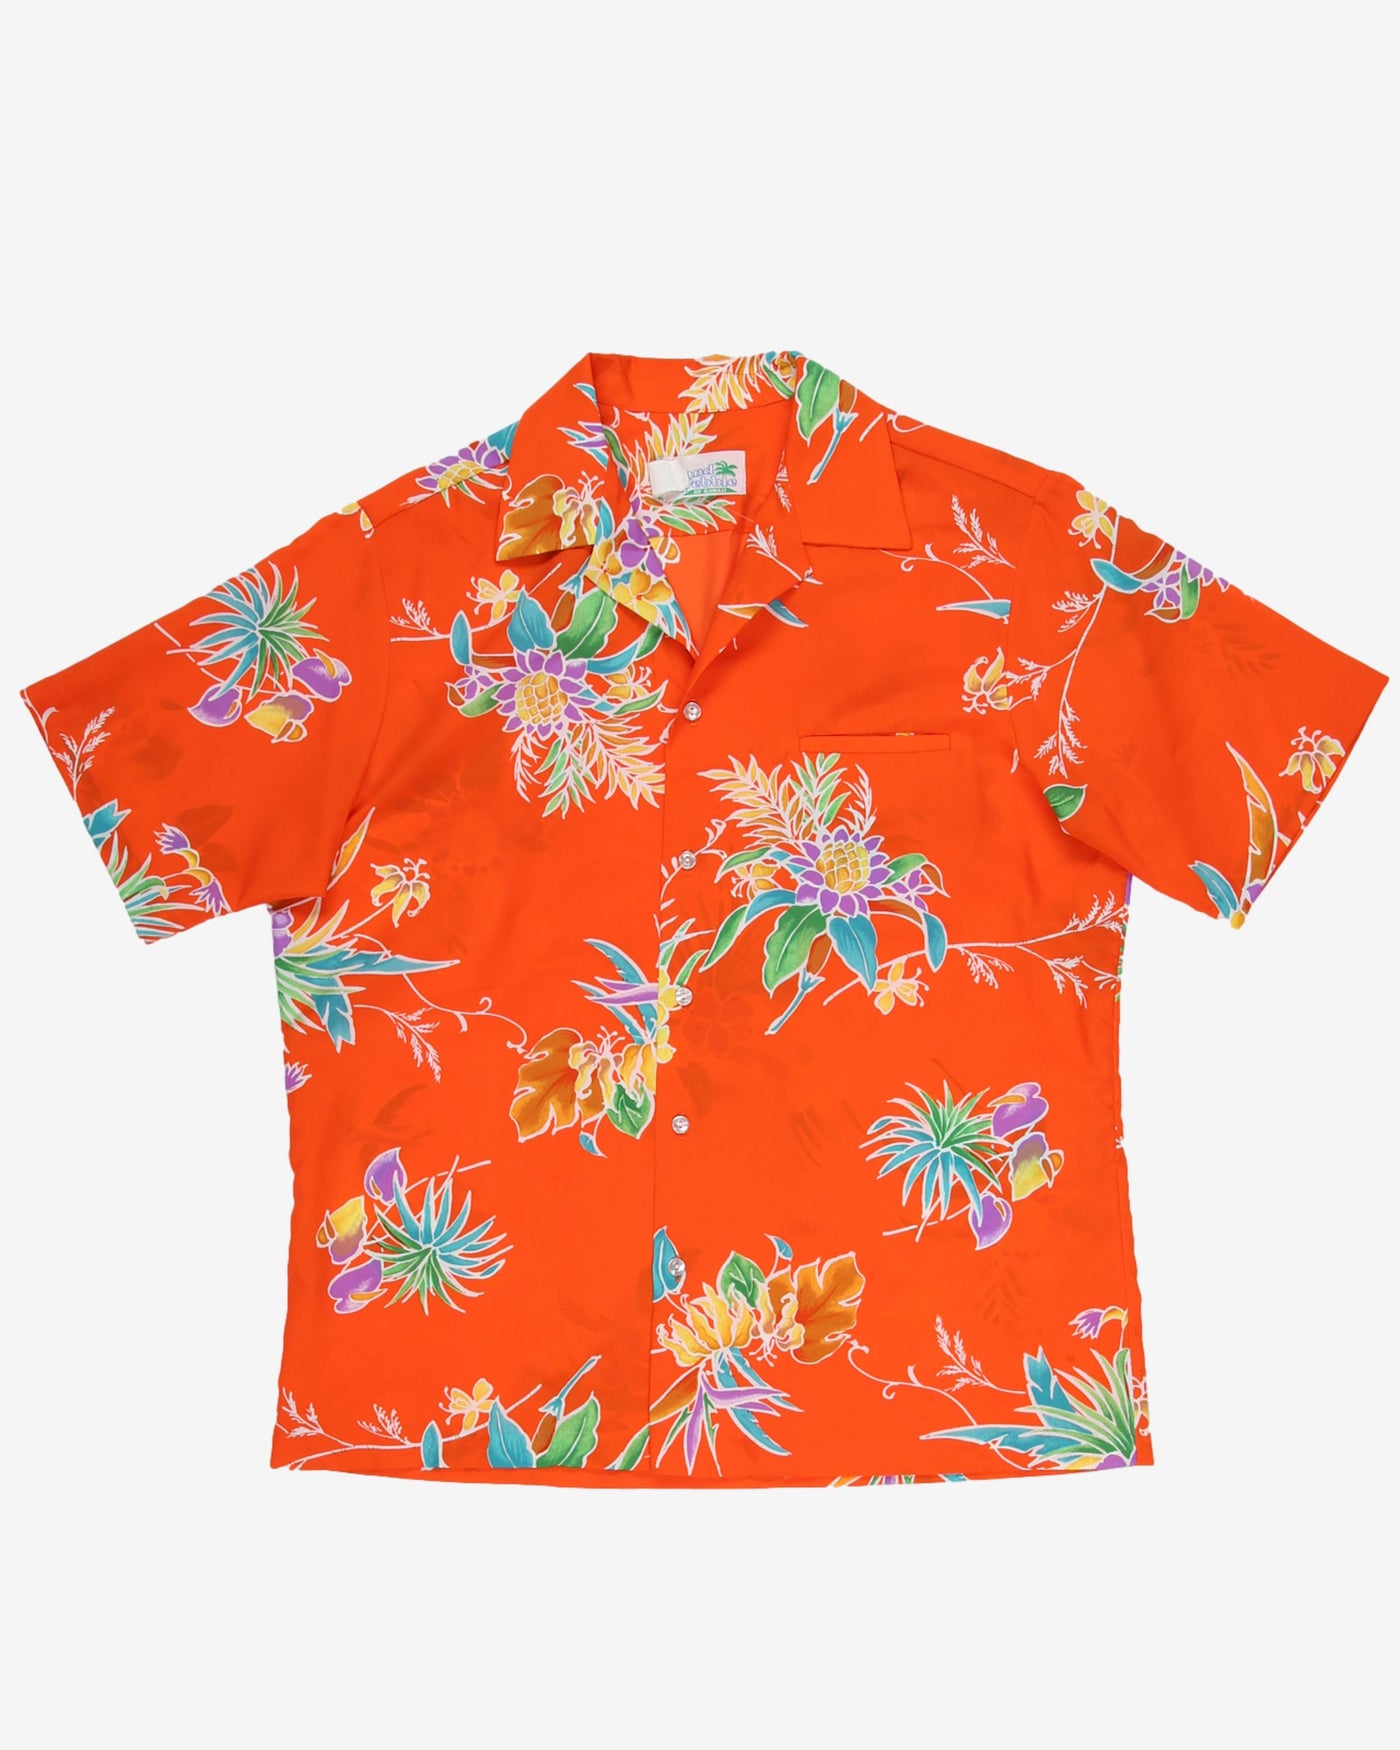 1990s orange patterned hawaiian shirt - L